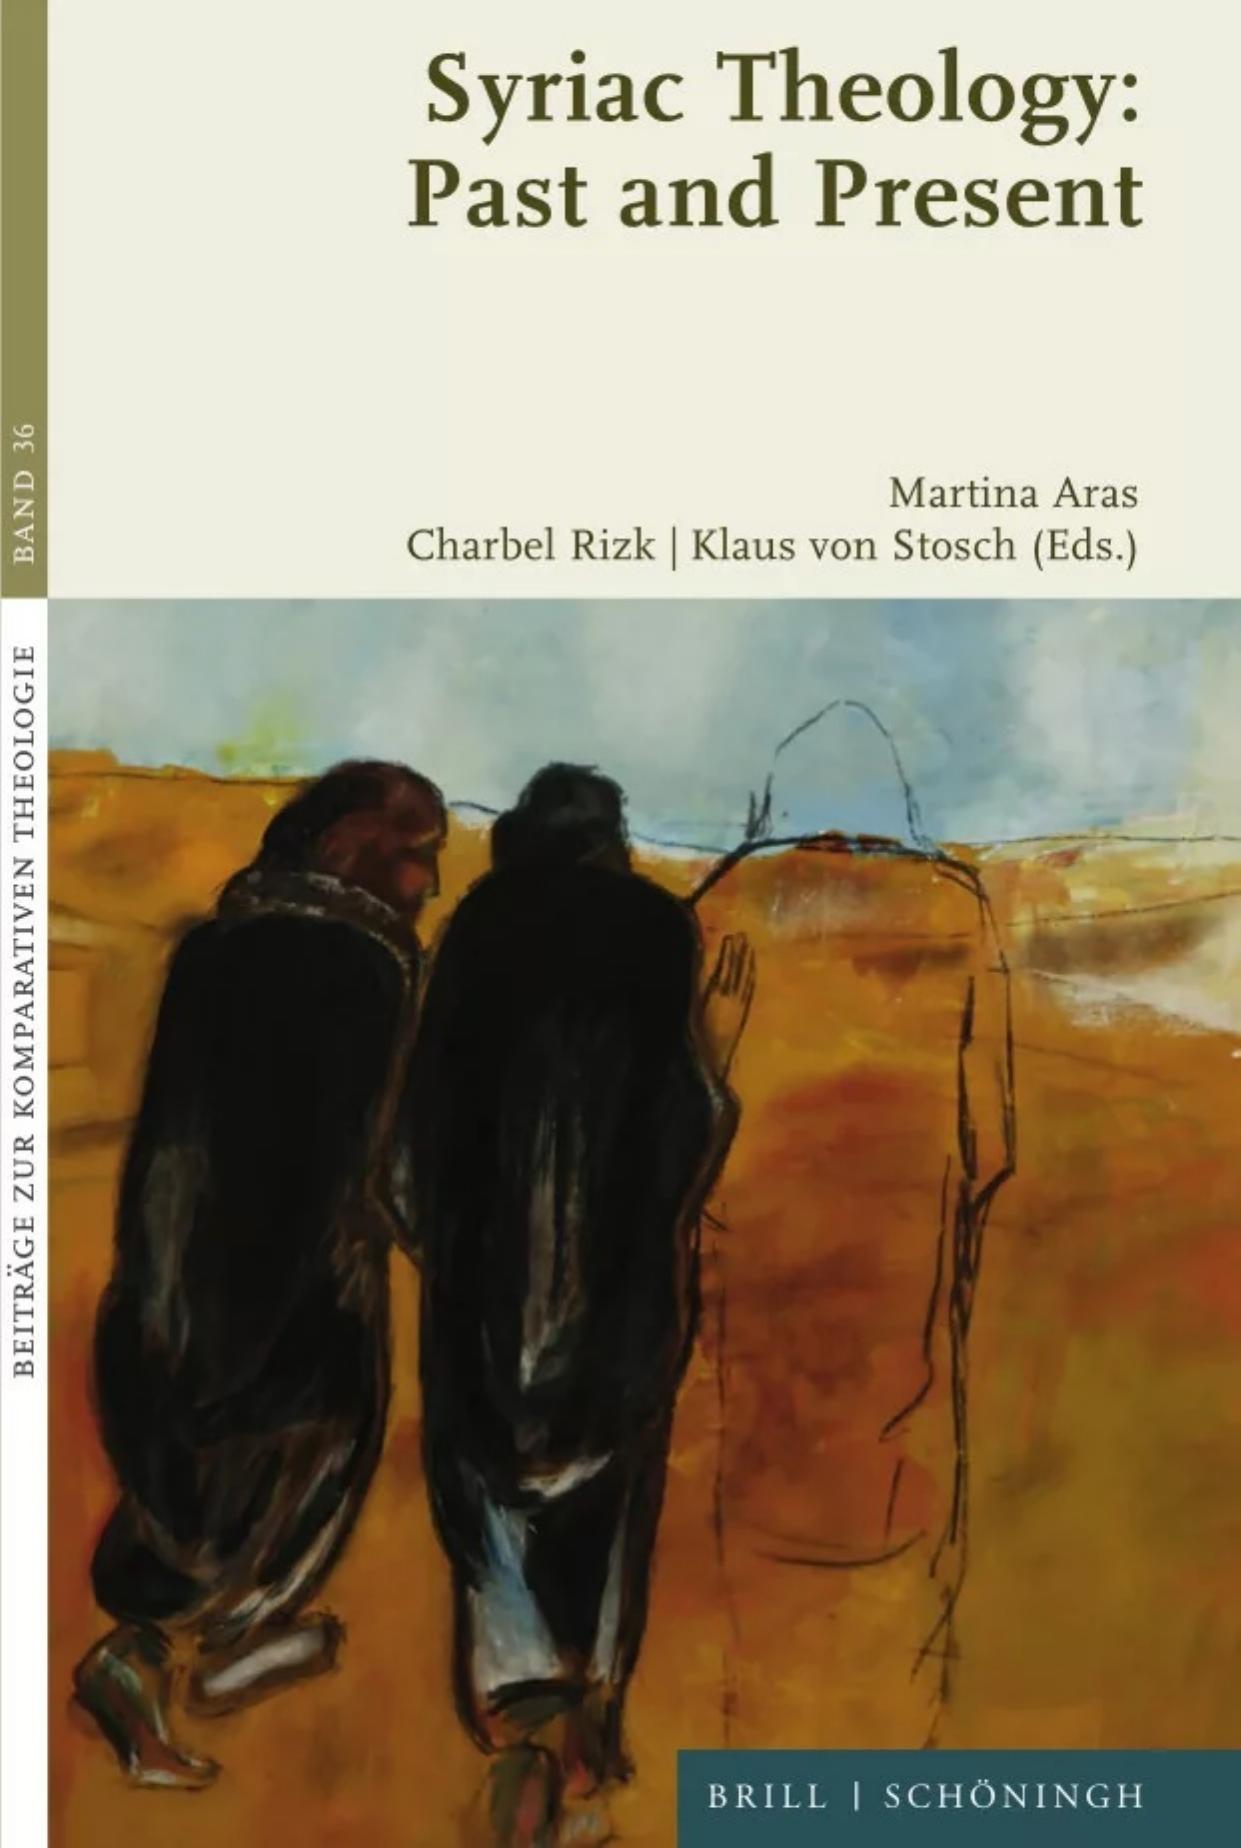 Syriac Theology: Past and Present by Martina Aras; Charbel Rizk; Klaus von Stosch